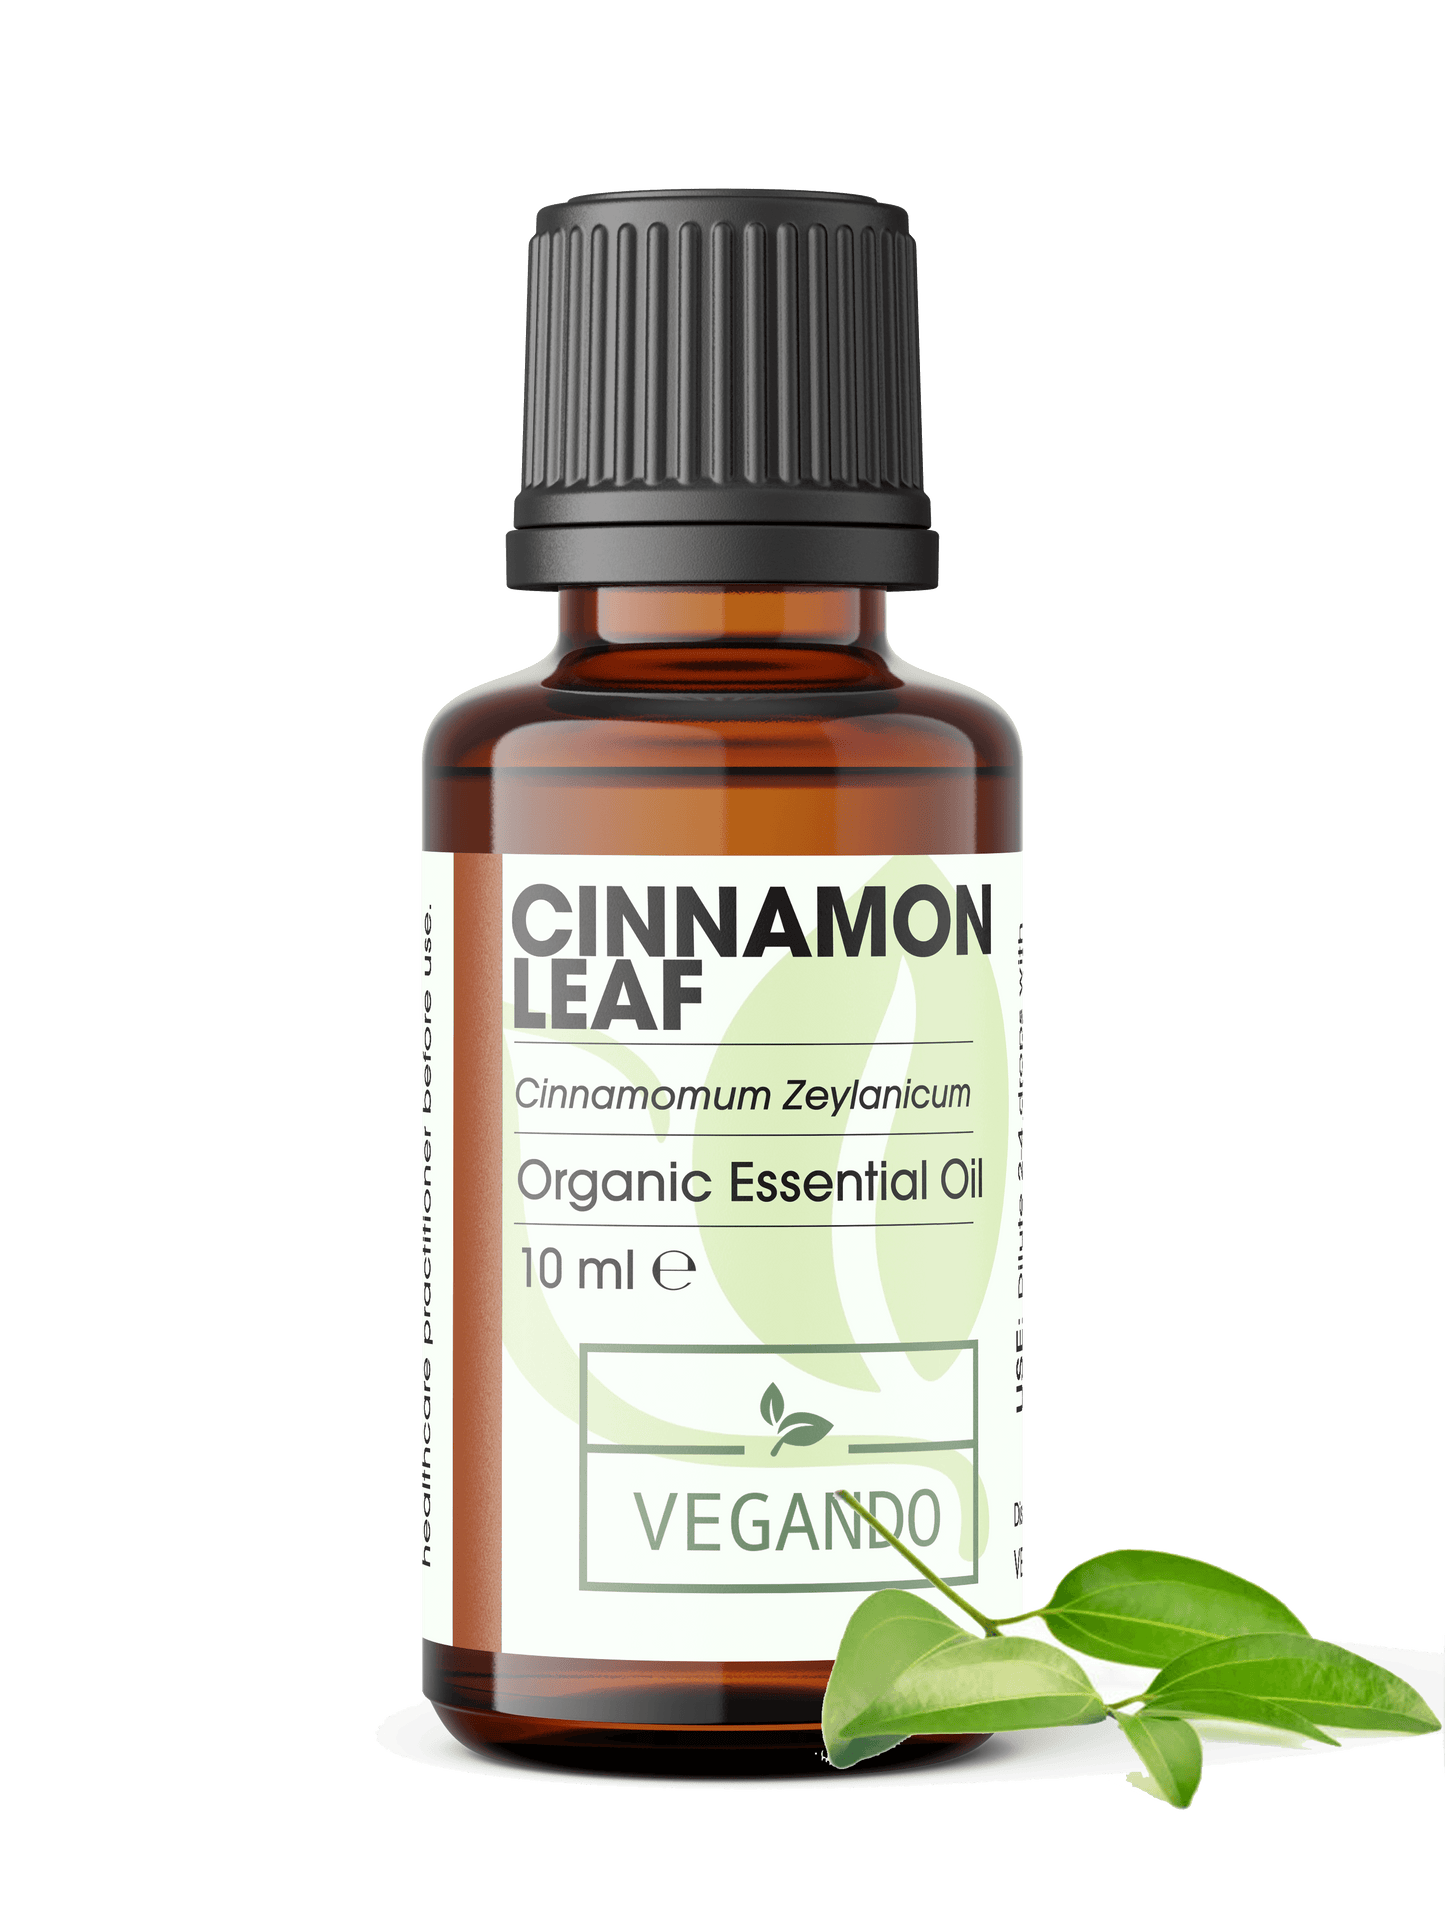 Cinnamon Leaf Organic Essential Oil 10ml.